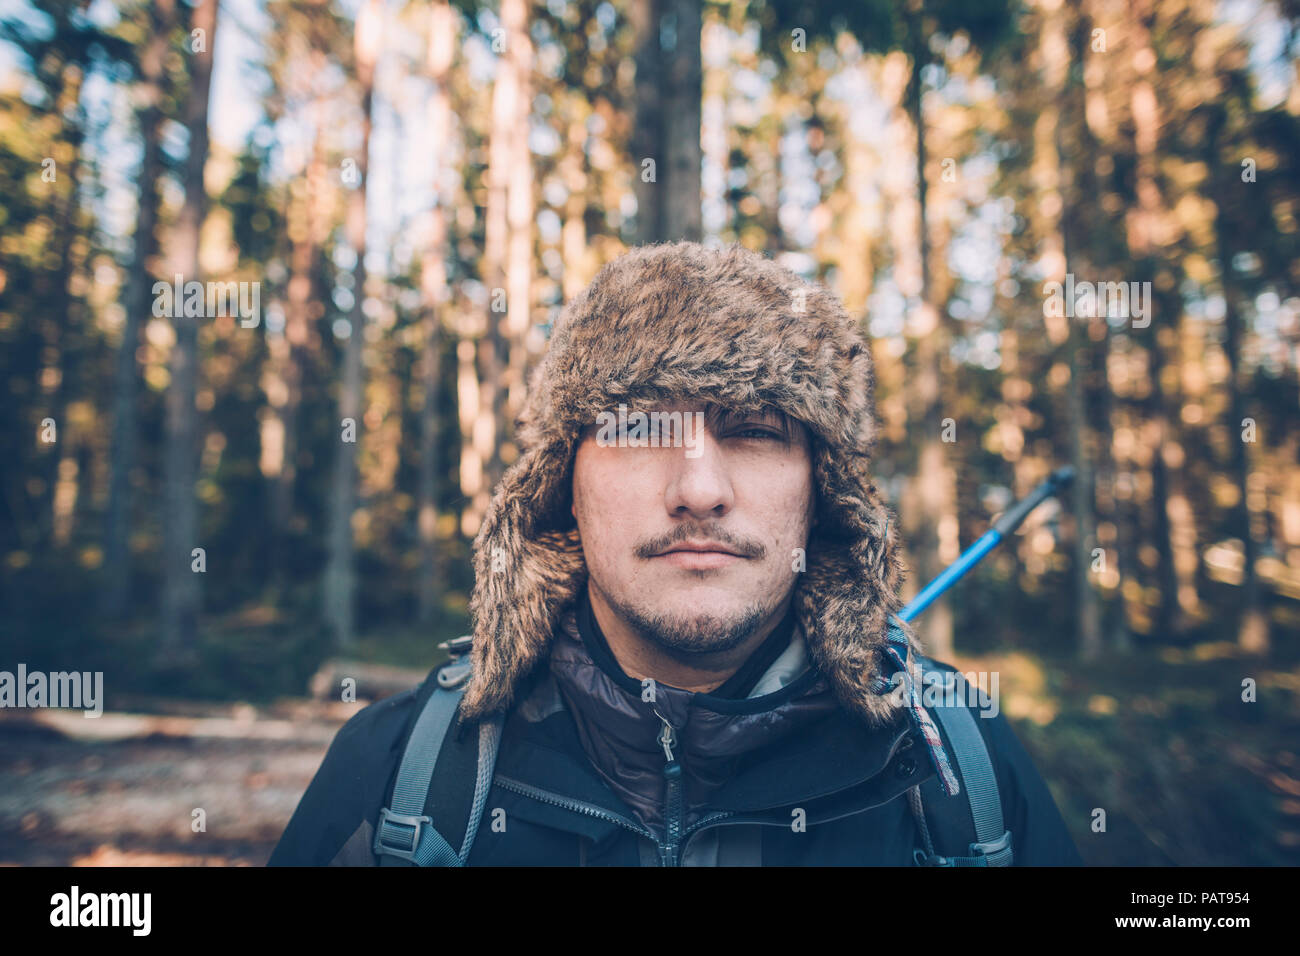 Sweden, Sodermanland, portrait of young man wearing fur cap in remote landscape Stock Photo